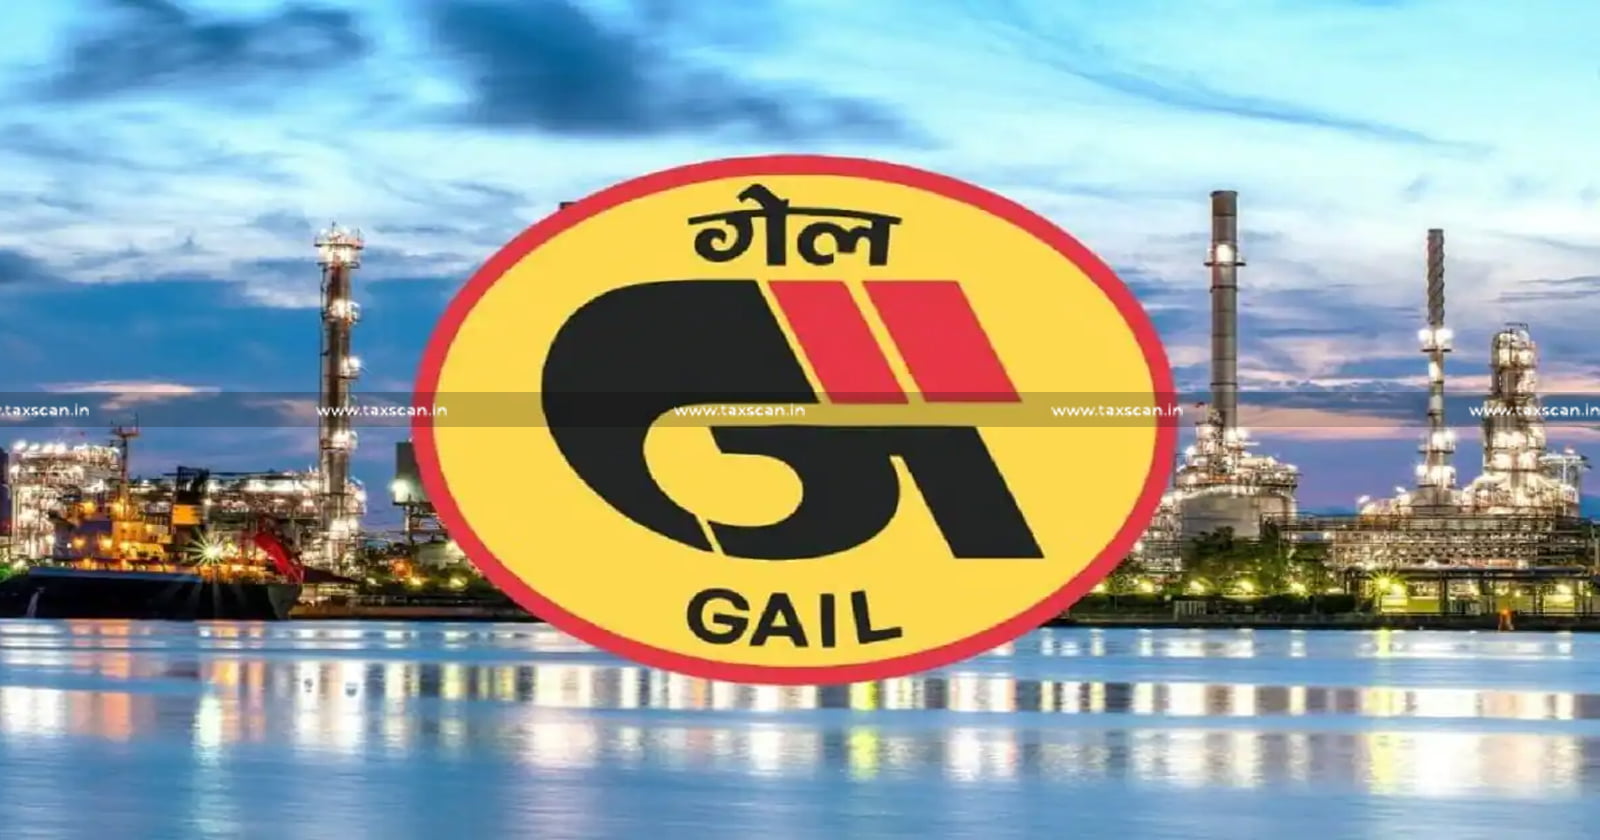 DGGI - GAIL - any amount - Contract Worker - Delhi Highcourt - taxscan